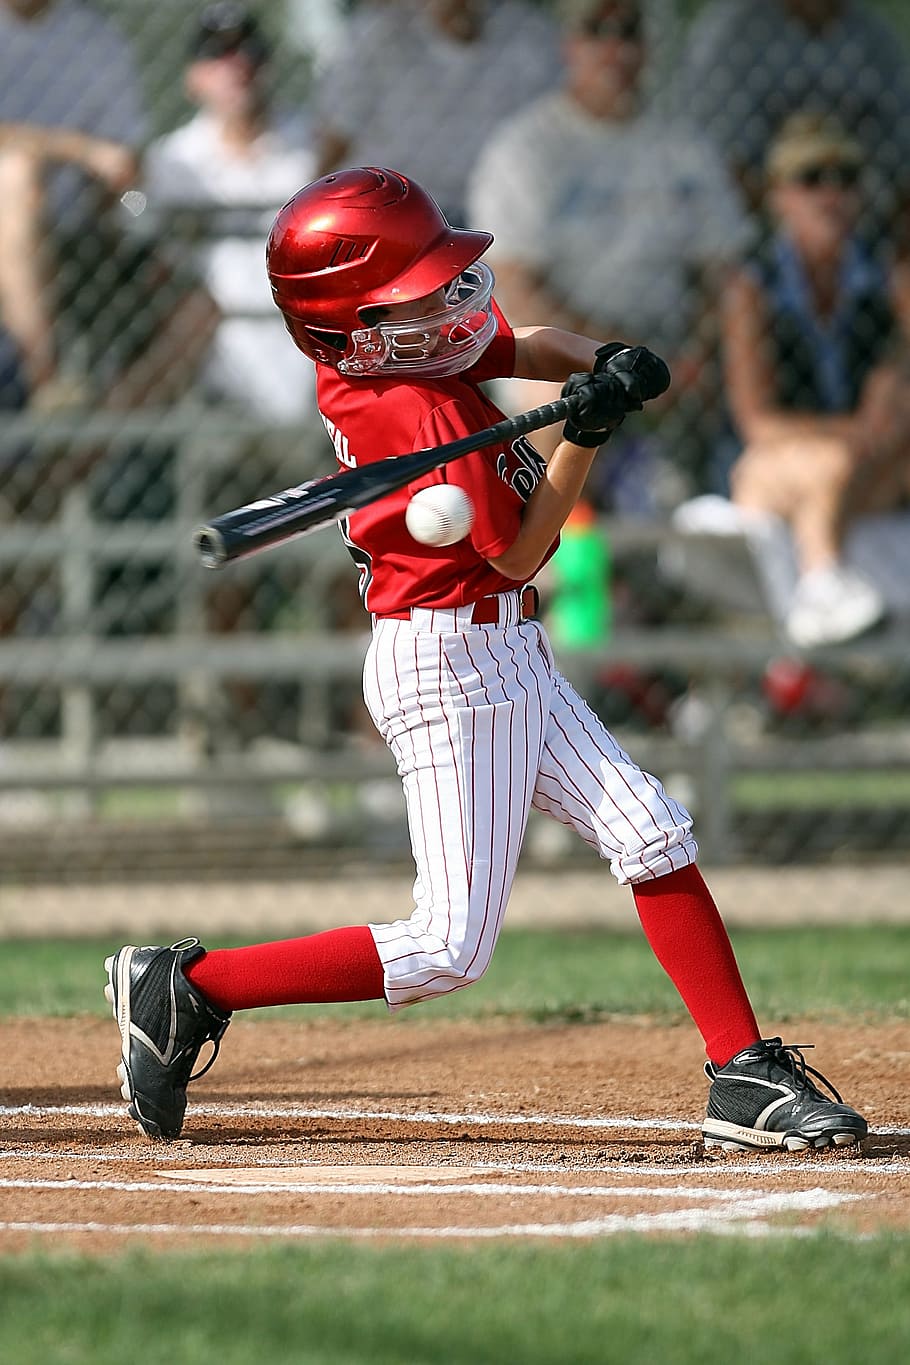 homem jogando beisebol, beisebol, massa, taco de beisebol, bola, rebatedor, liga pequena, jovem, juventude, menino